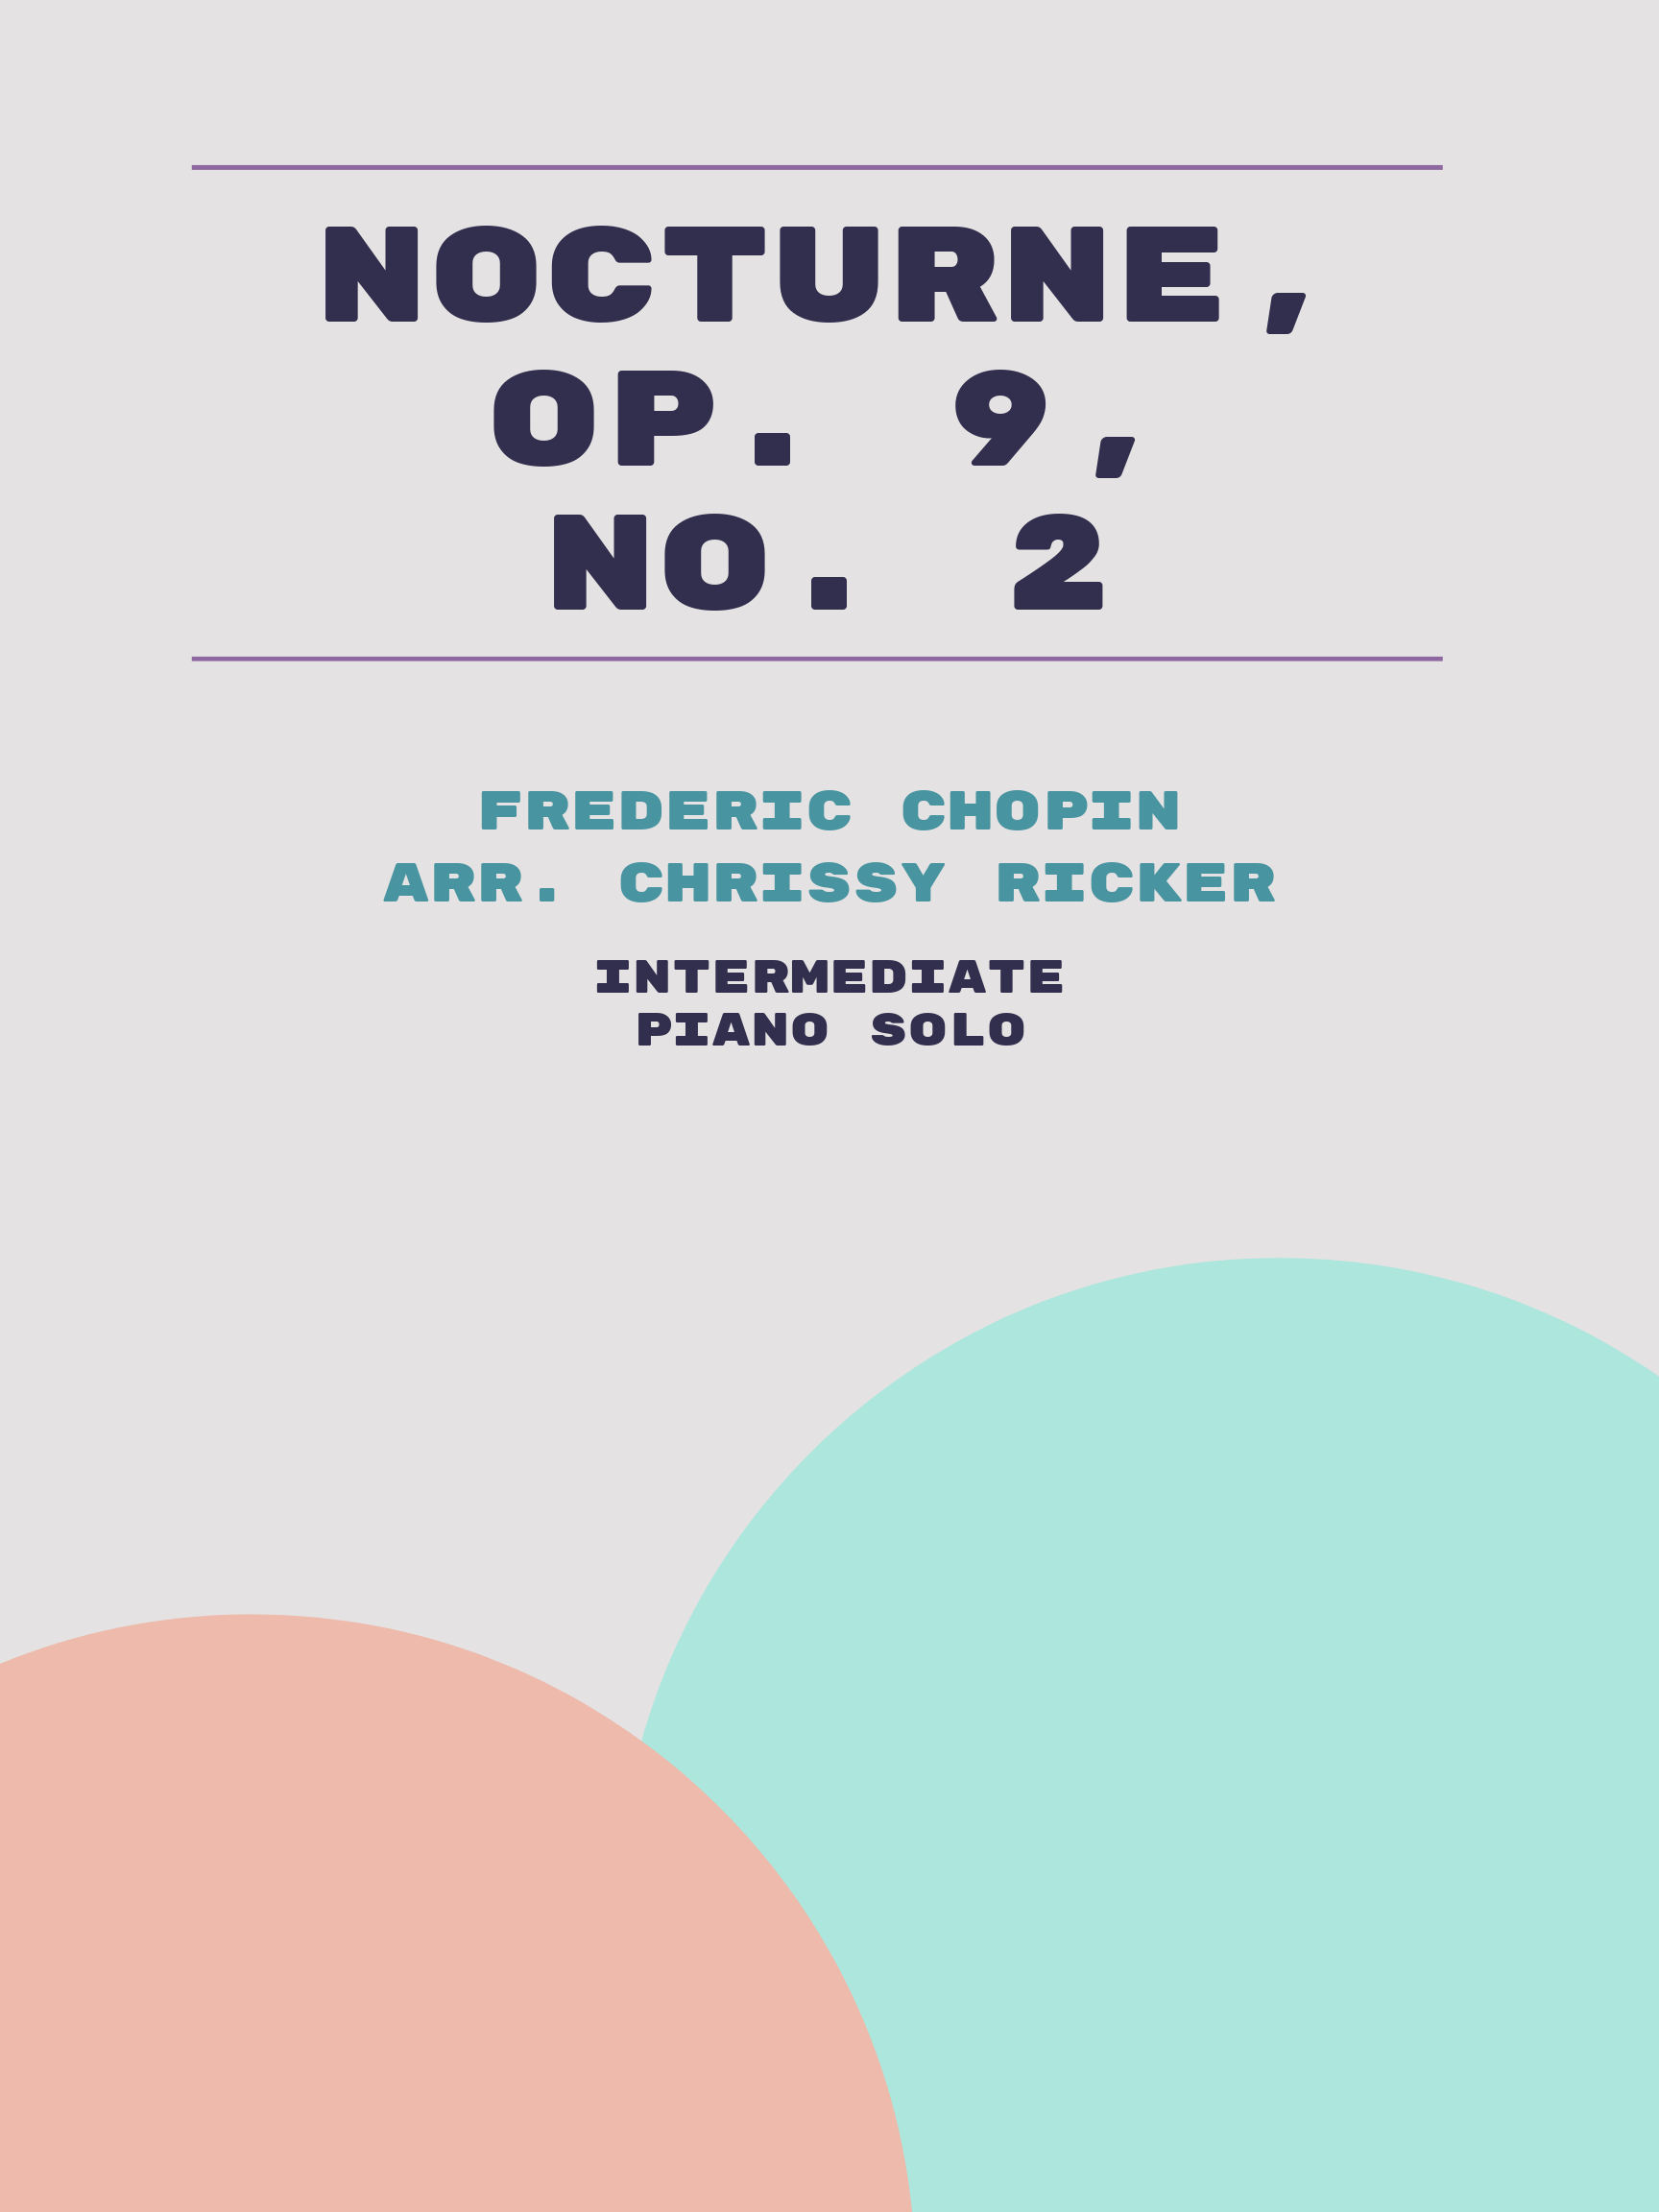 Nocturne, Op. 9, No. 2 Sample Page